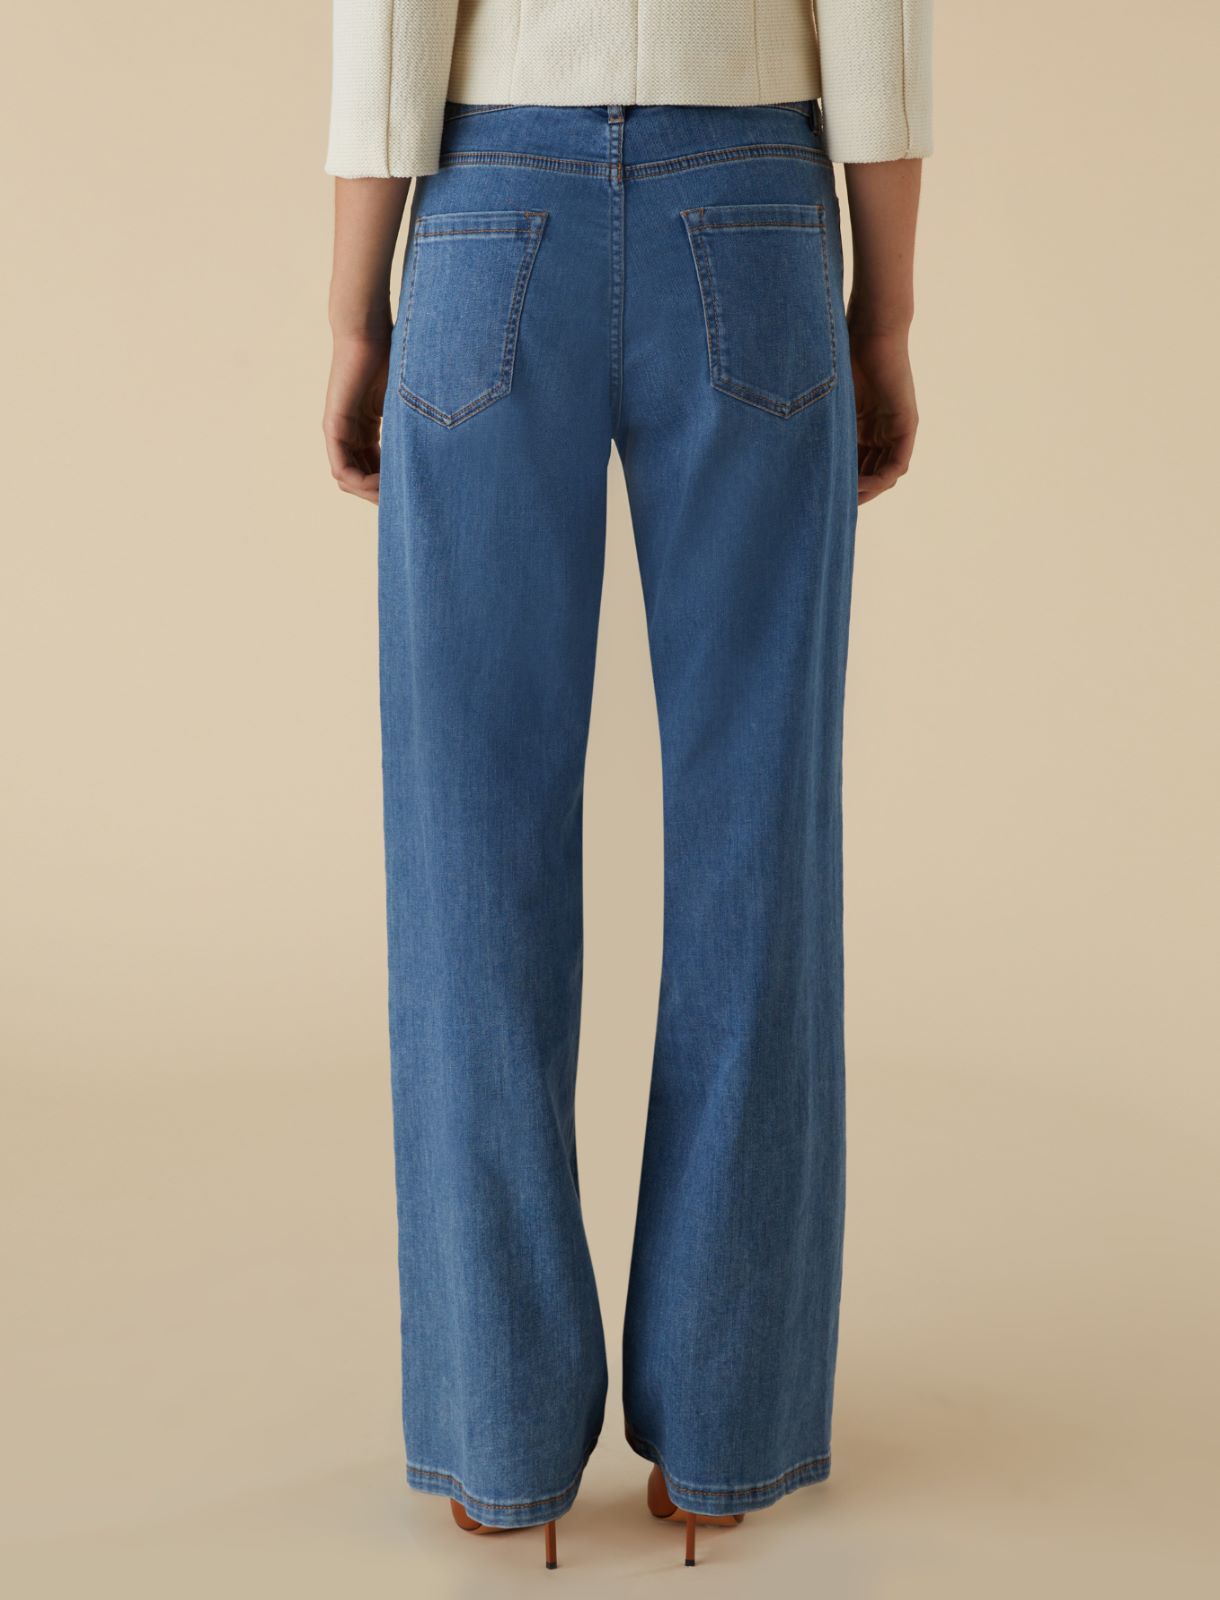 Jean straight leg - Bleu jeans - Marella - 2